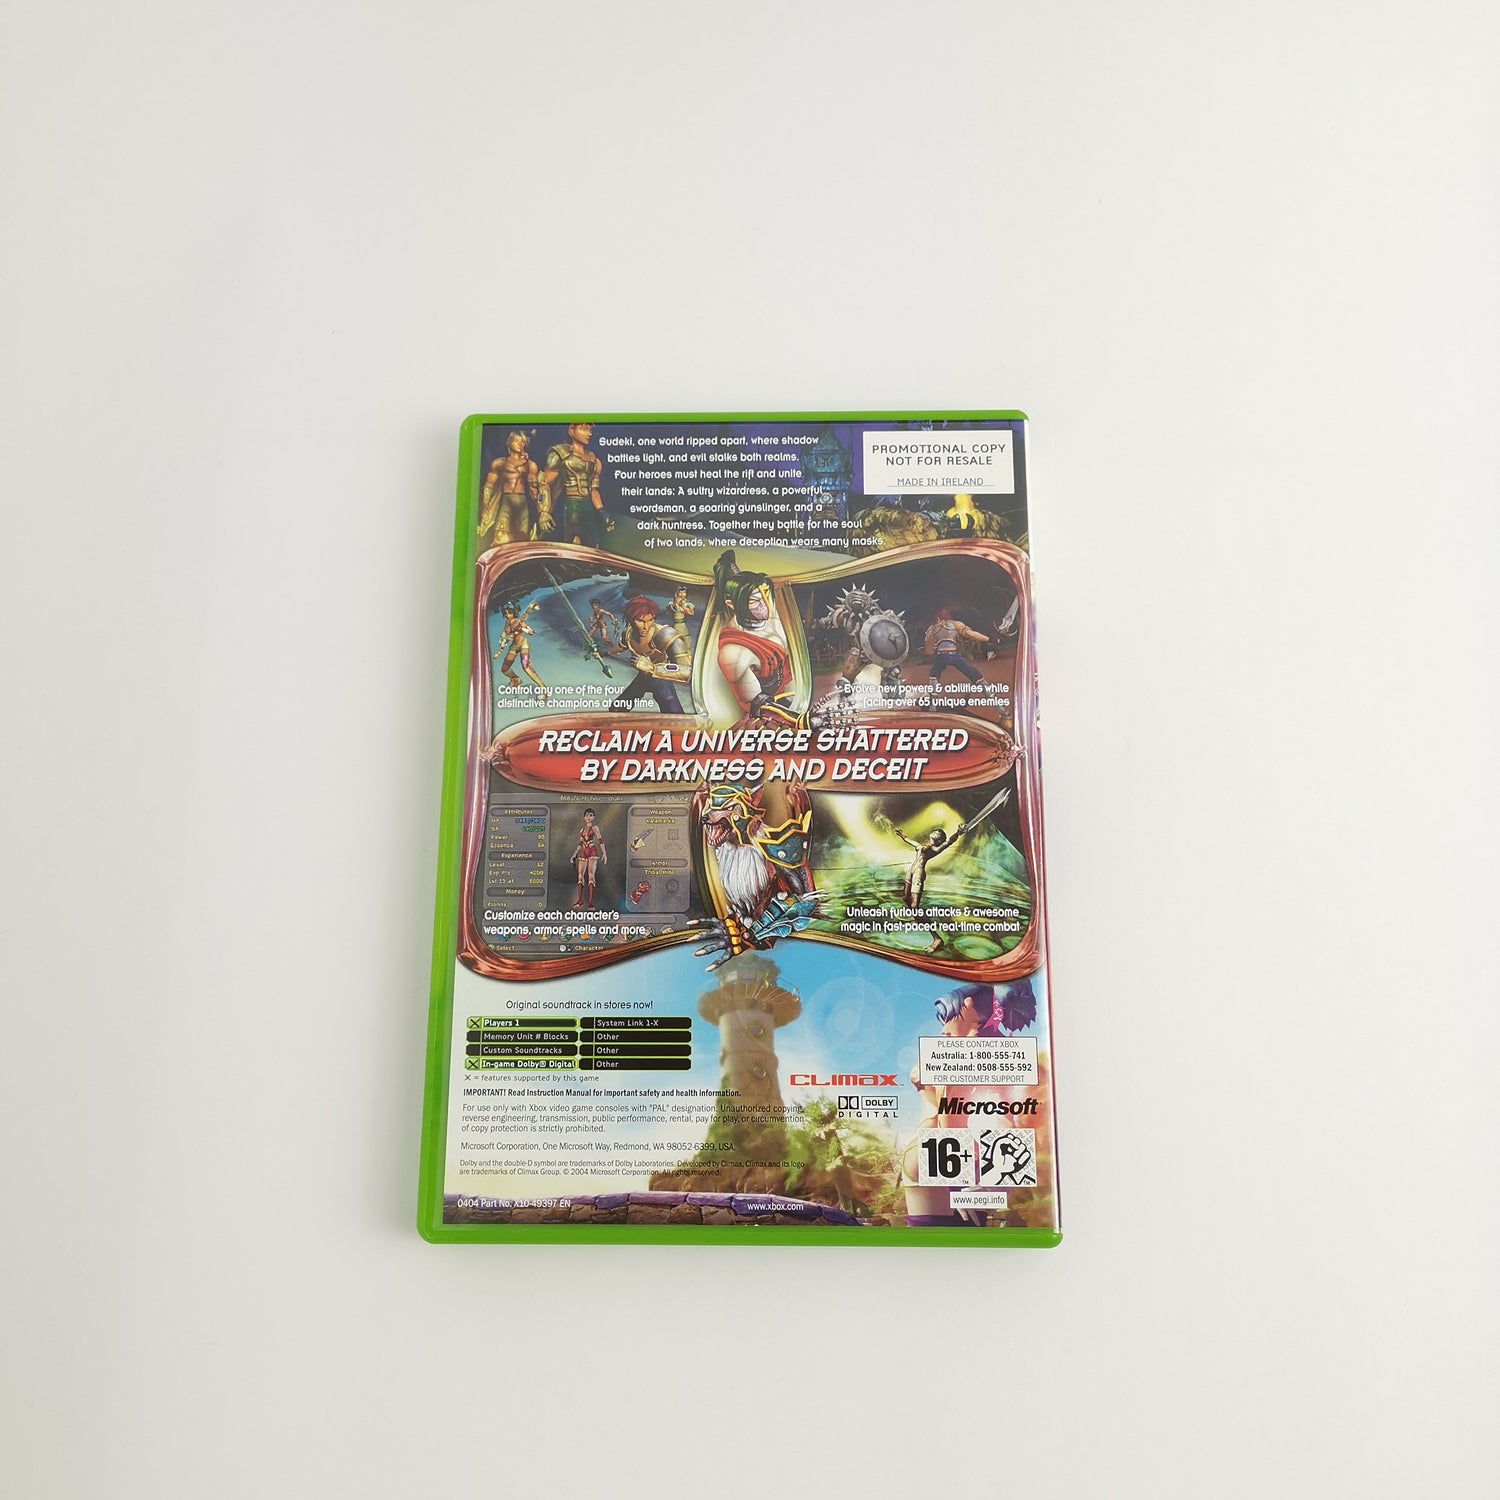 Microsoft Xbox Classic Game : Sudeki - Promotional Copy Not For Resale | PROMO